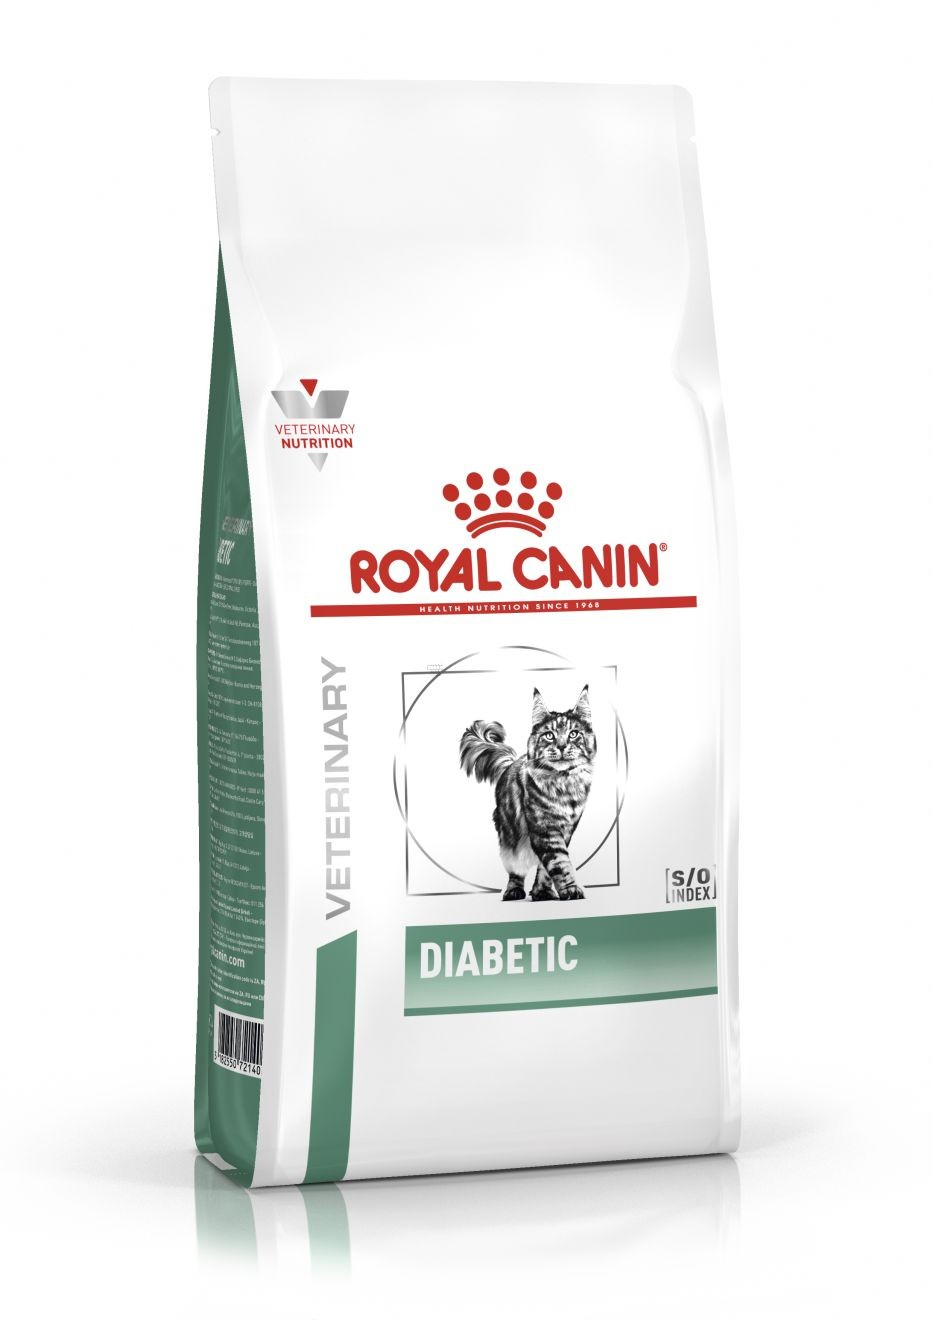 Royal Canin Diabetic Feline para gatos